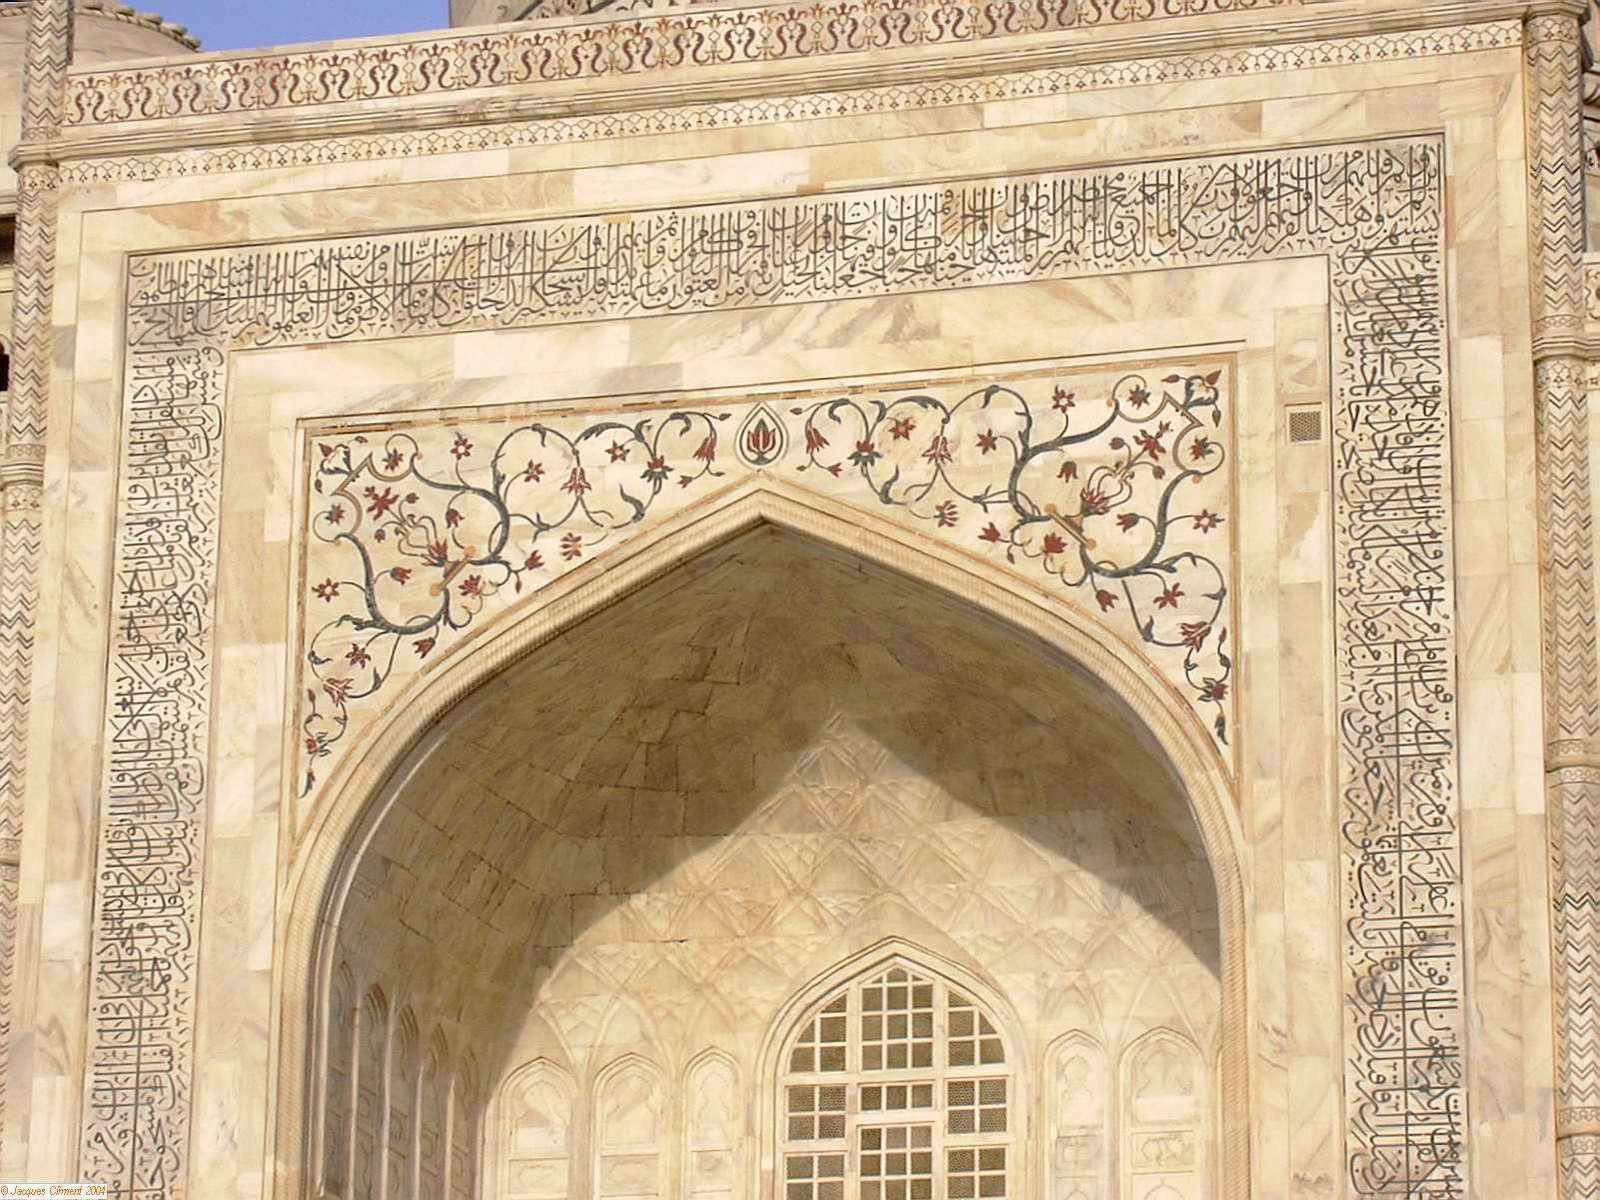 [INDIA-Agra+Taj+quoranic+verses+on+arch+with+semi-precious+stones.jpg]